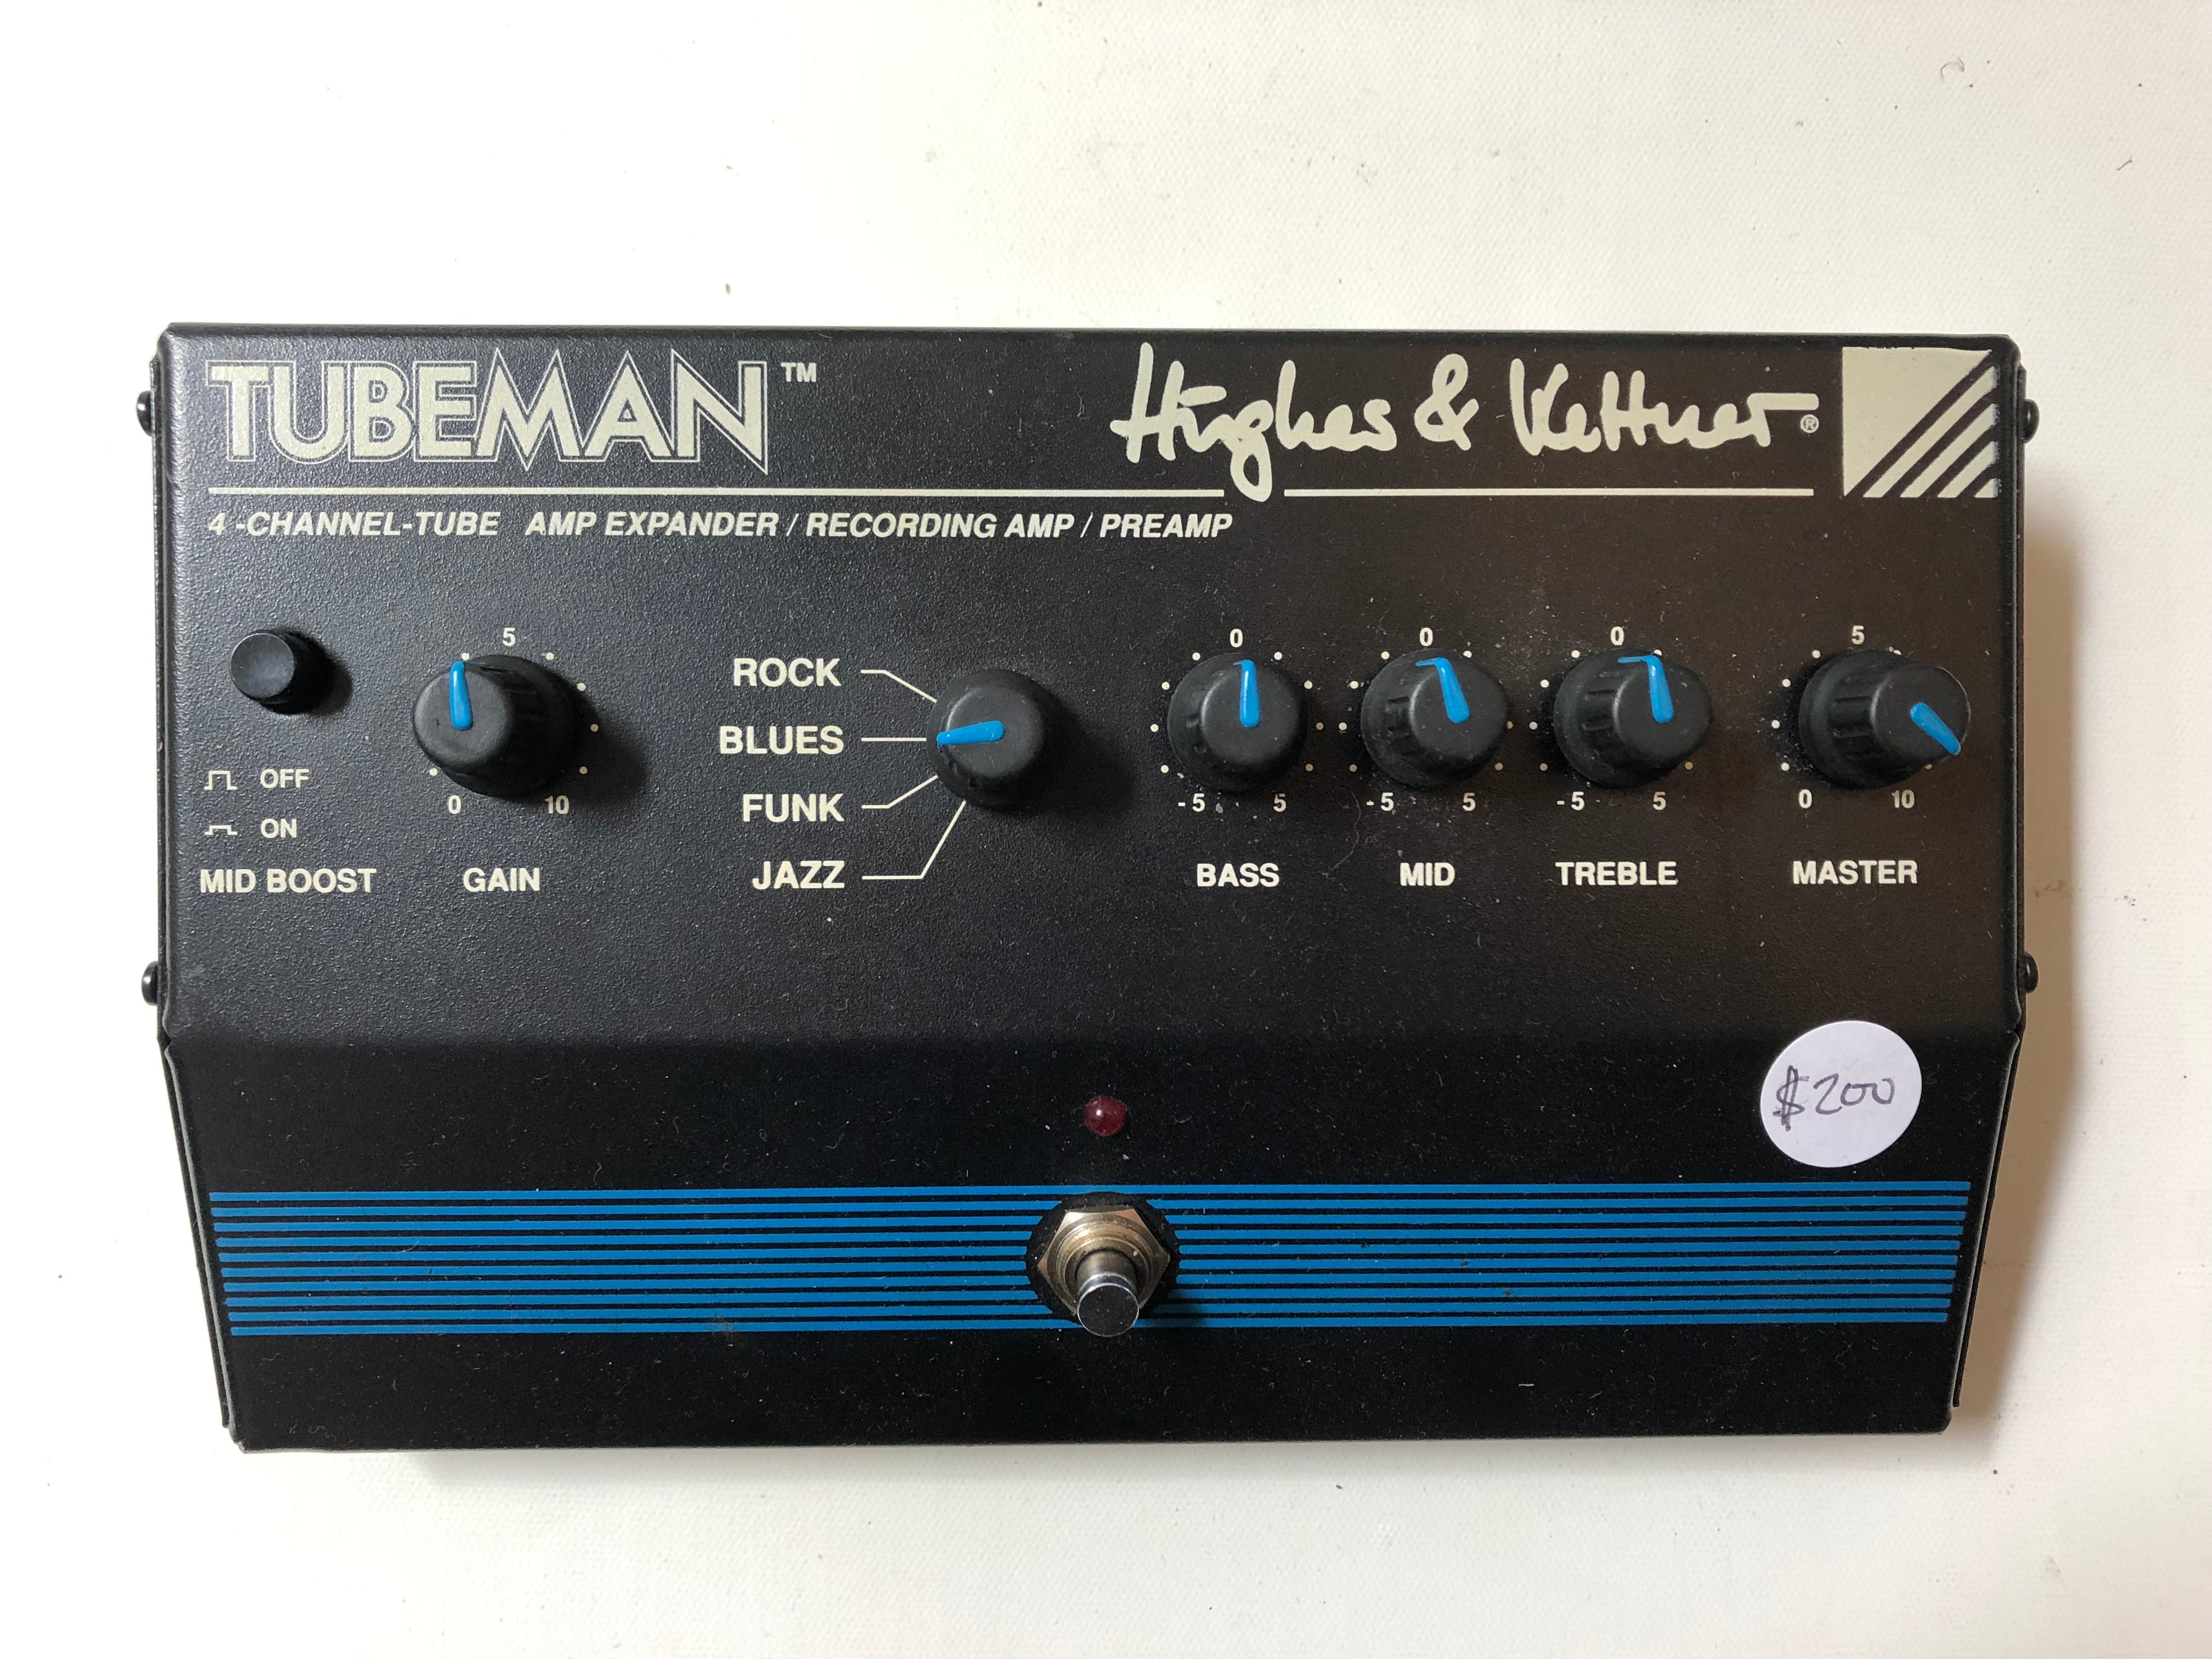 Hughes and Kettner - Tubeman – Marrs Audio